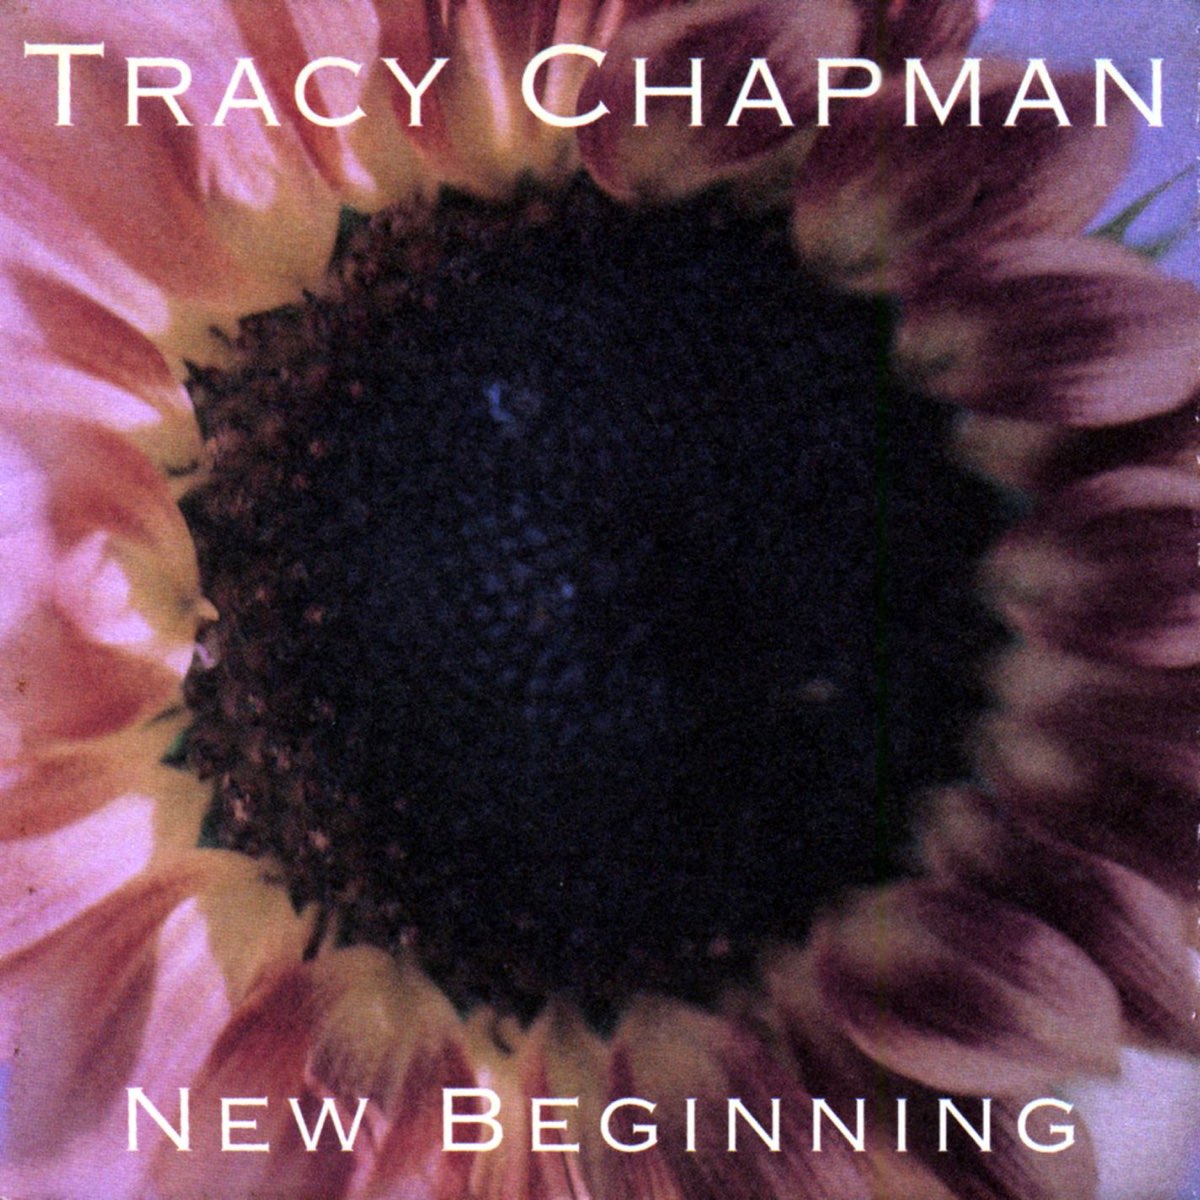 New Beginning - Album by Tracy Chapman - Apple Music